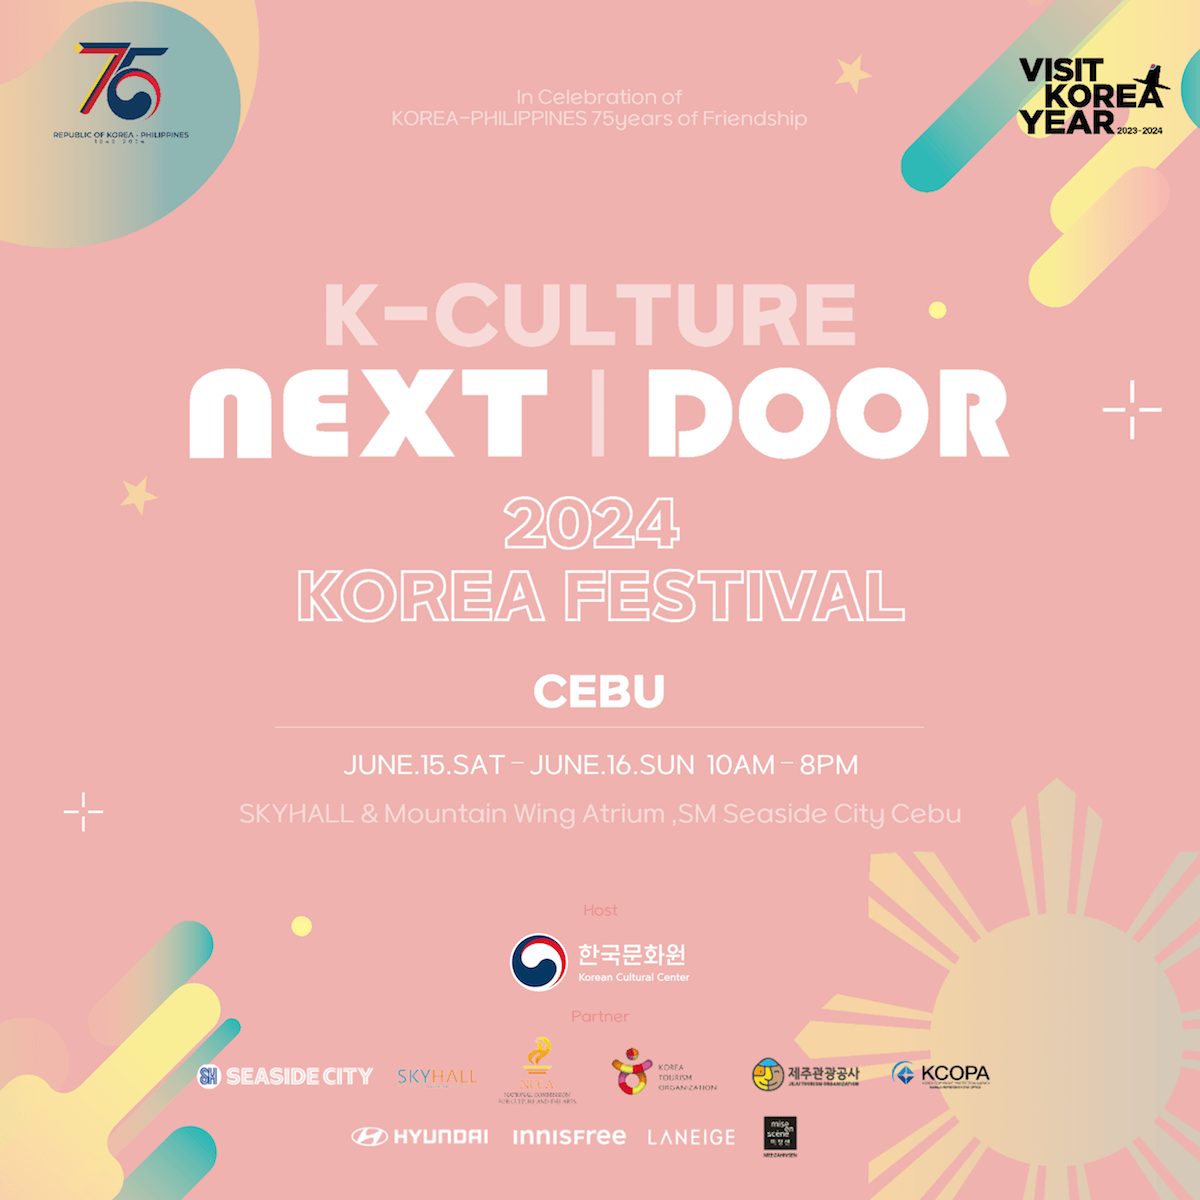 K-Culture Next Door 2024: Korea Festival in Cebu